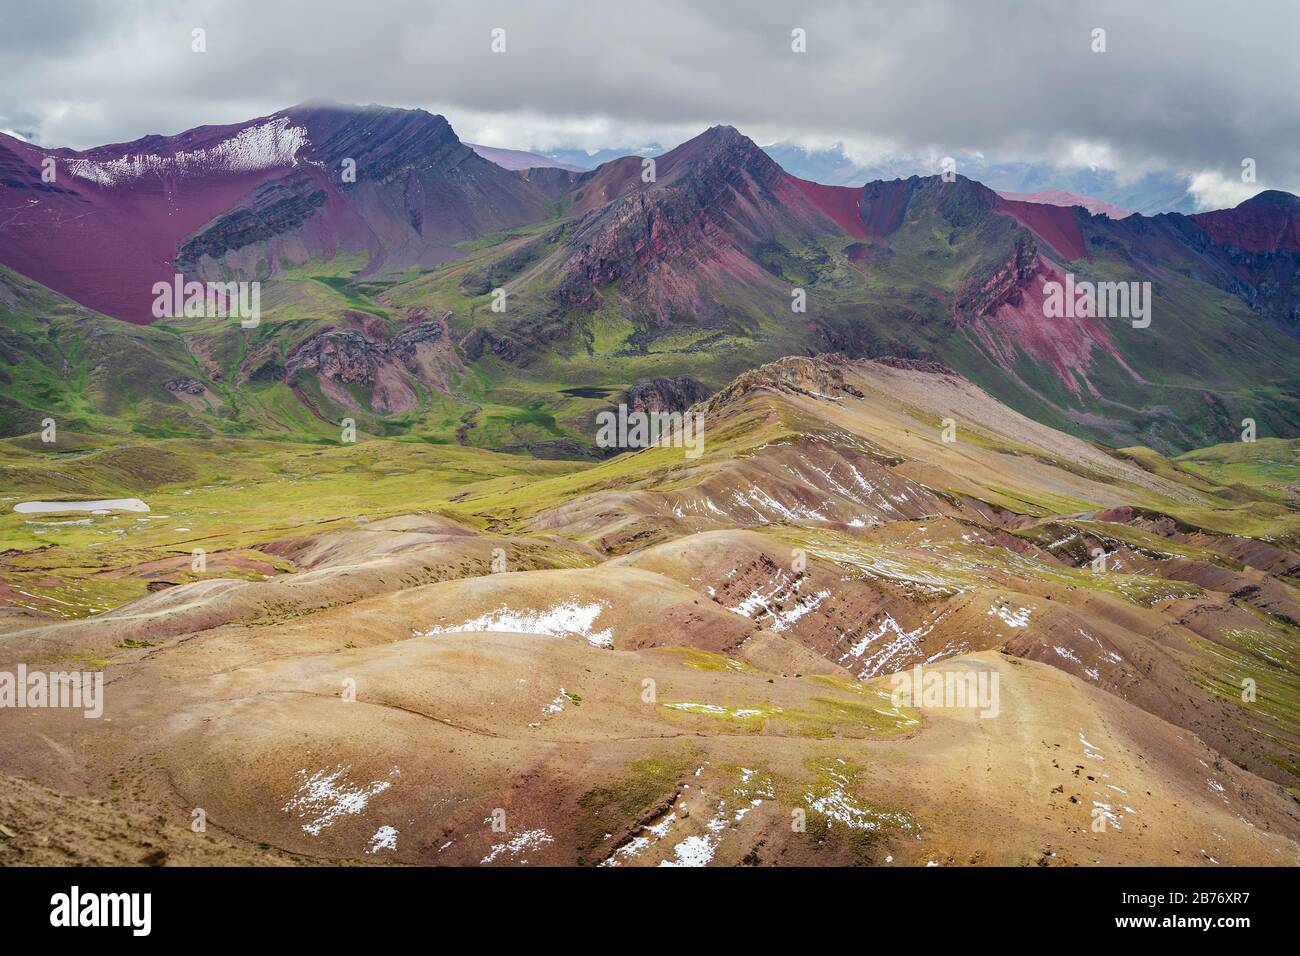 Rotes Tal in der Nähe des Regenbogenbergs Vinicunca in der Cordillera de Vilcanta, Region Cusco, Peru. Stockfoto